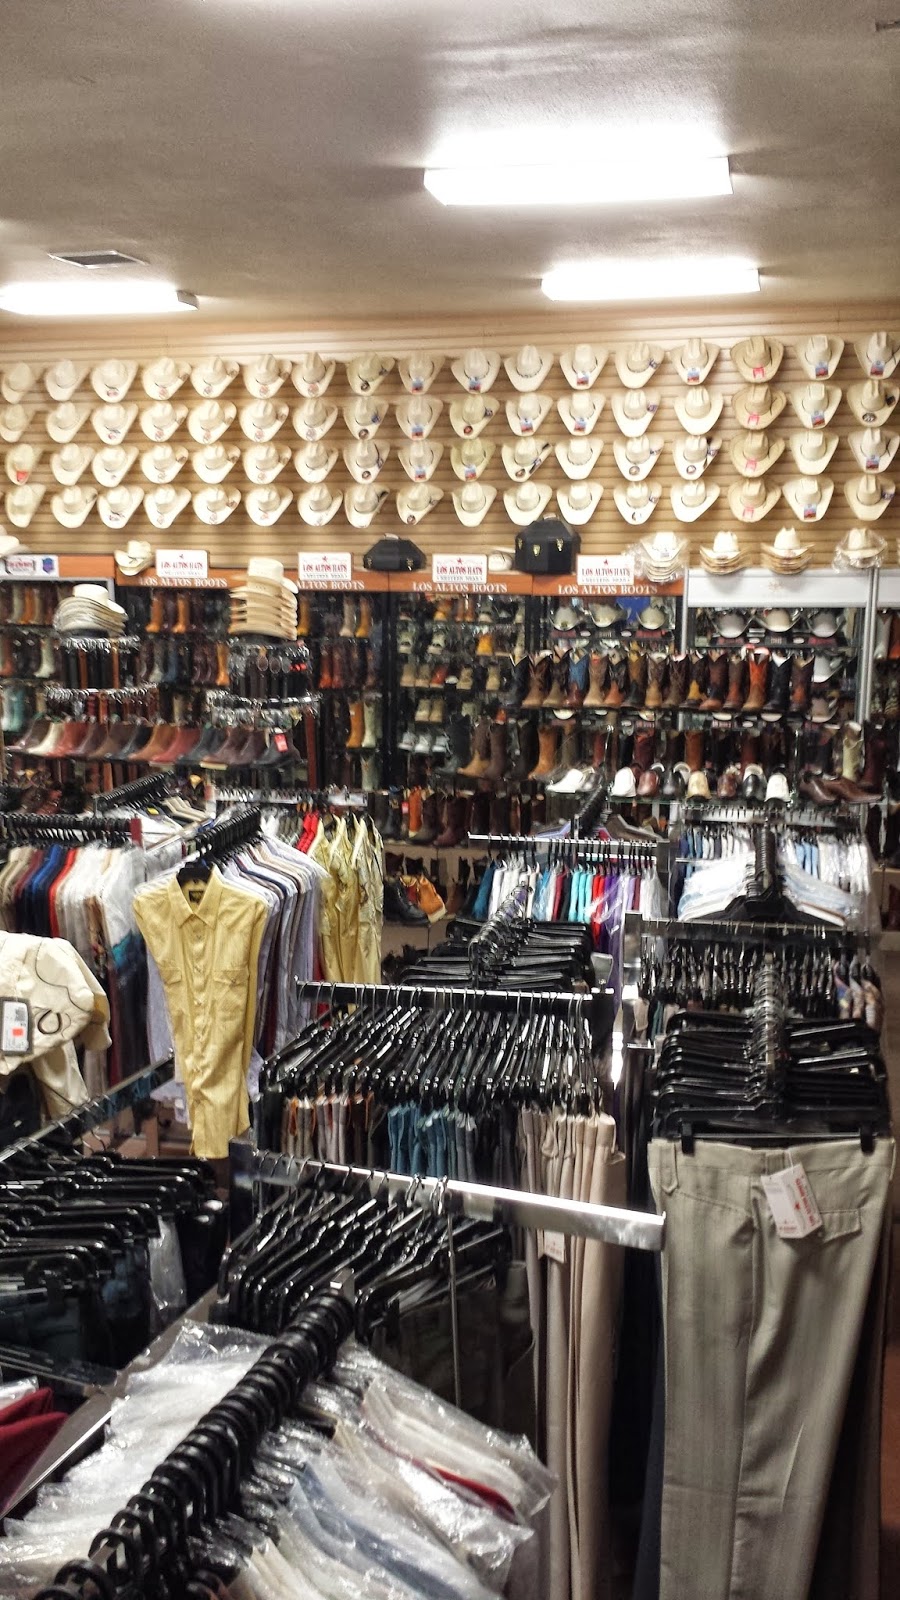 El Vaquero - The Cowboy Store - shoe store  | Photo 2 of 10 | Address: 506 E First St, Santa Ana, CA 92701, USA | Phone: (714) 547-9609